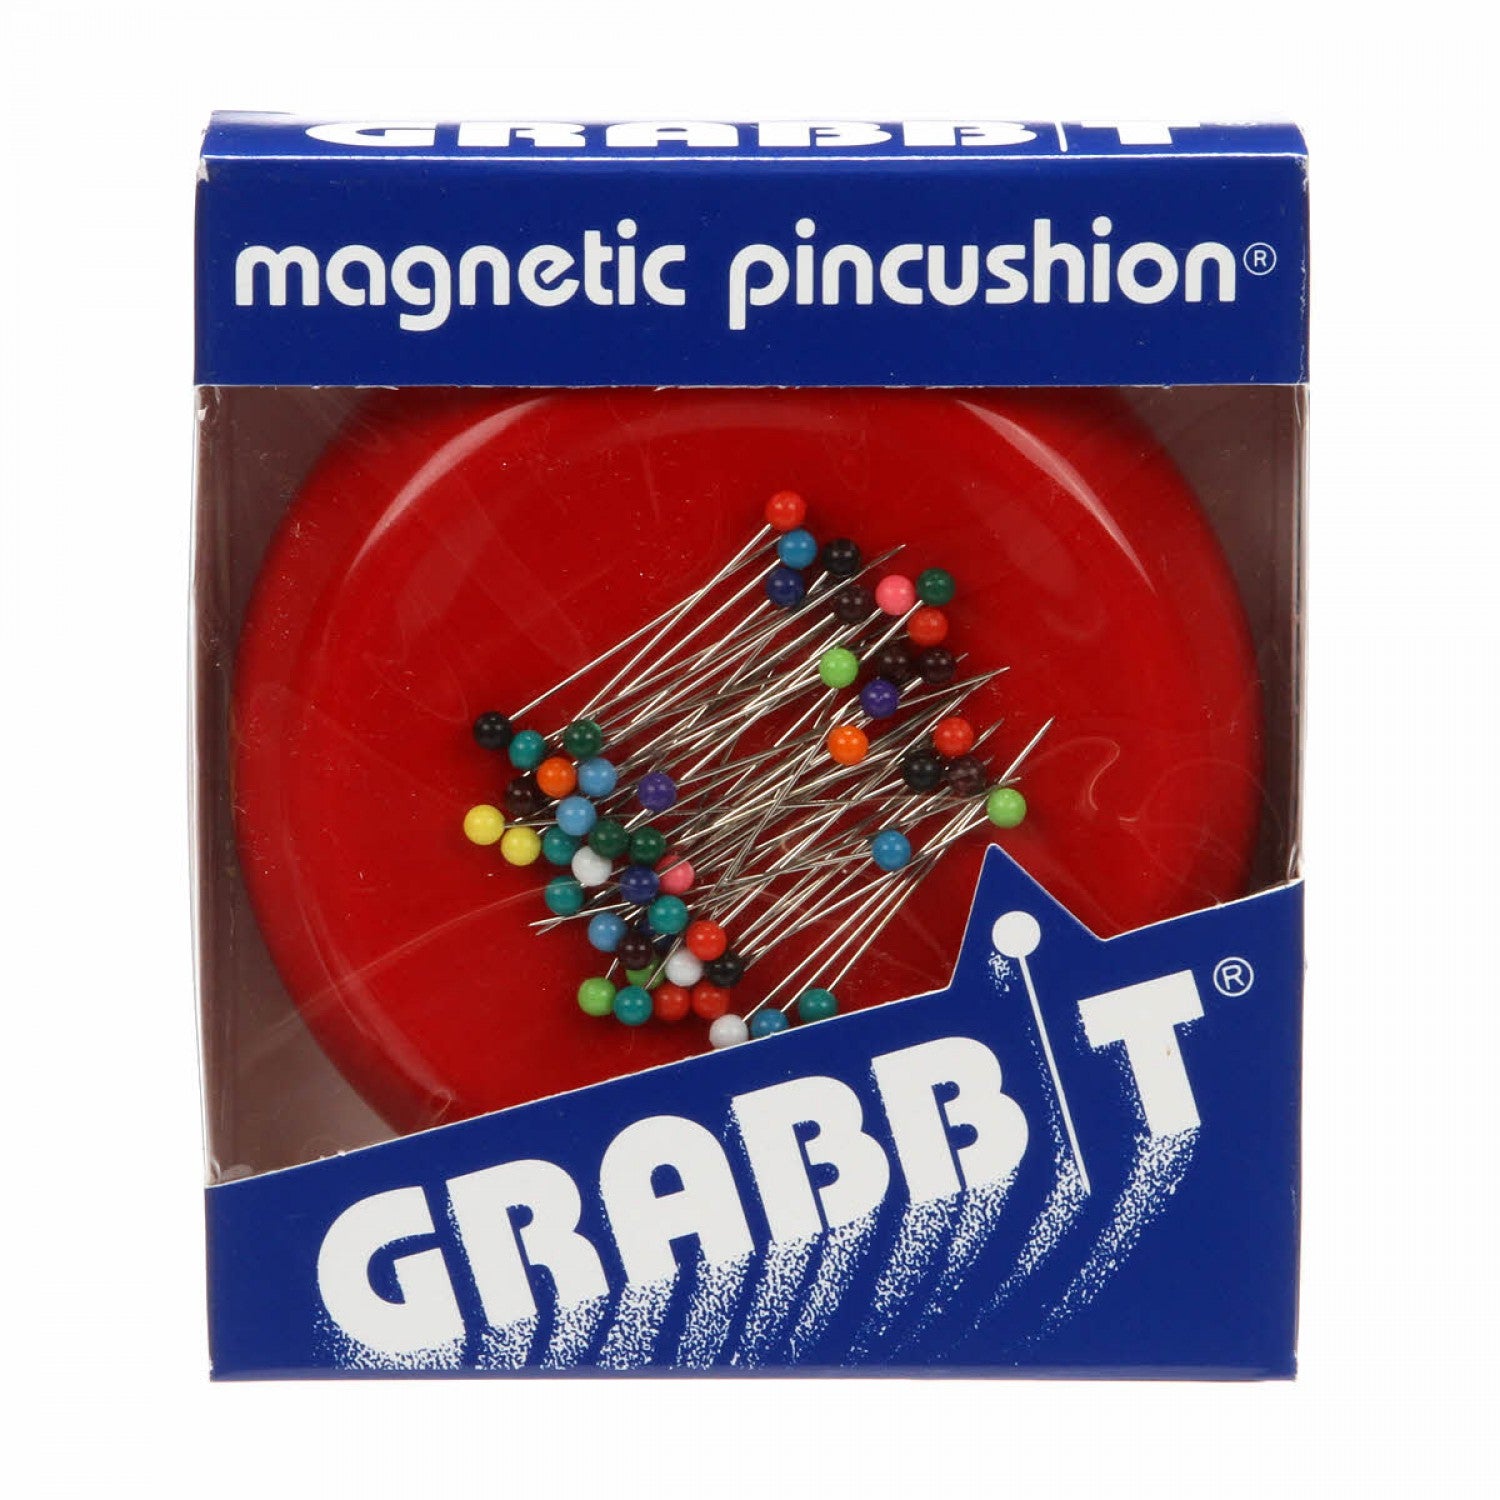 Grabbit Magnetic Pincushion - Red